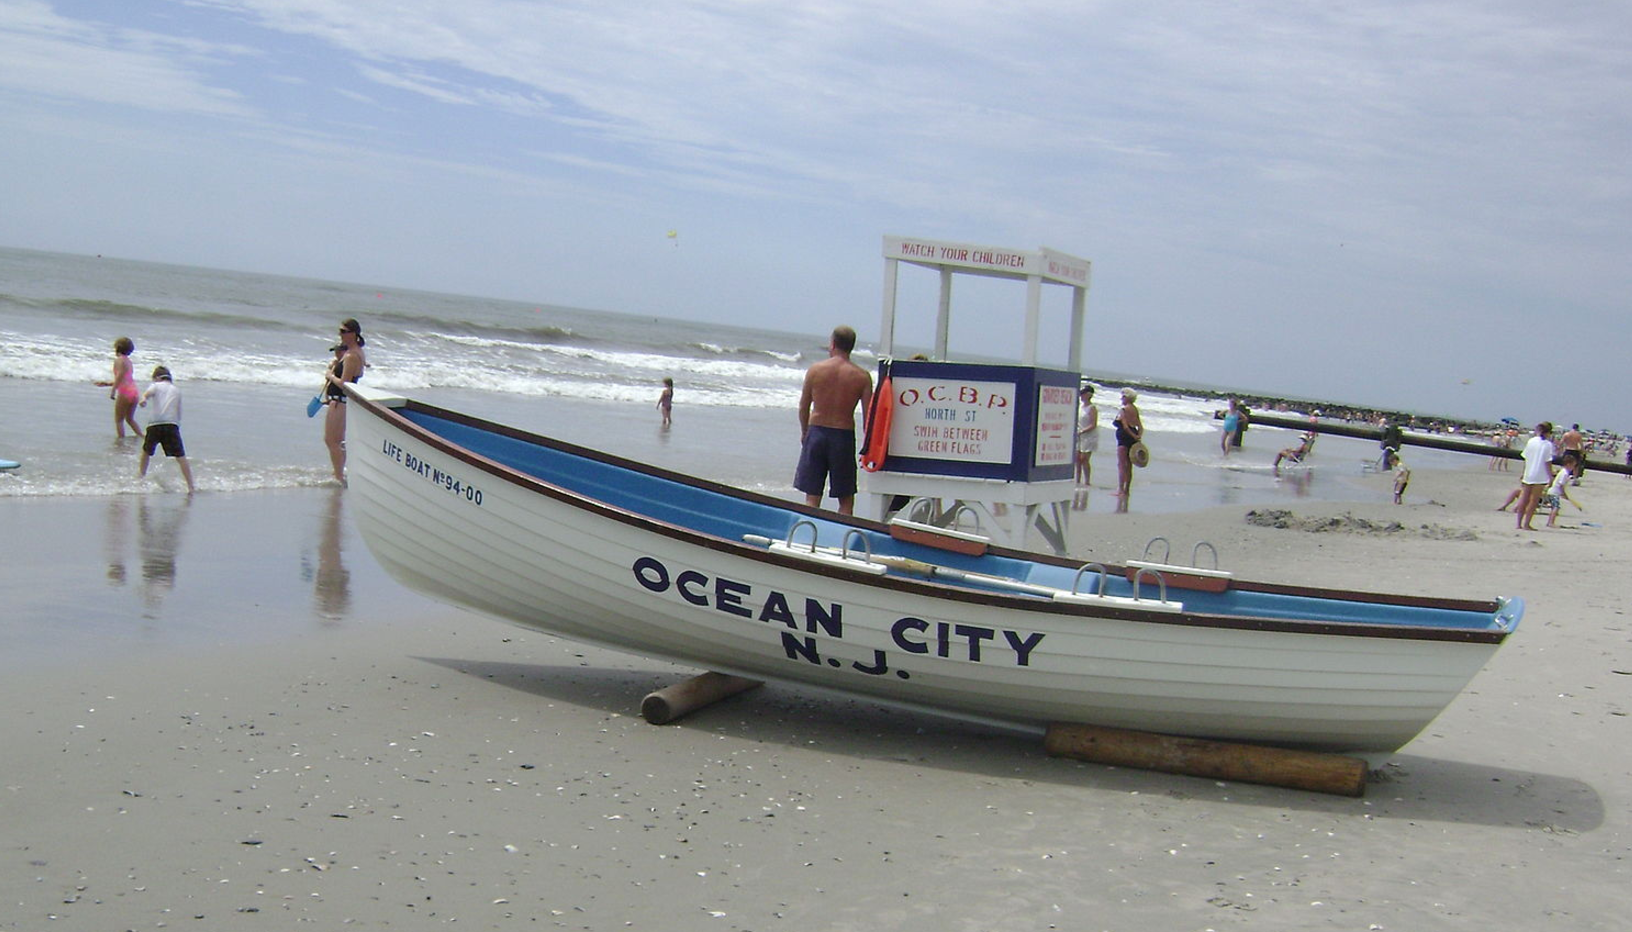  By BJ Neary (OC beach patrol boat) [CC BY-SA 2.0 (http://creativecommons.org/licenses/by-sa/2.0)], via Wikimedia Commons 